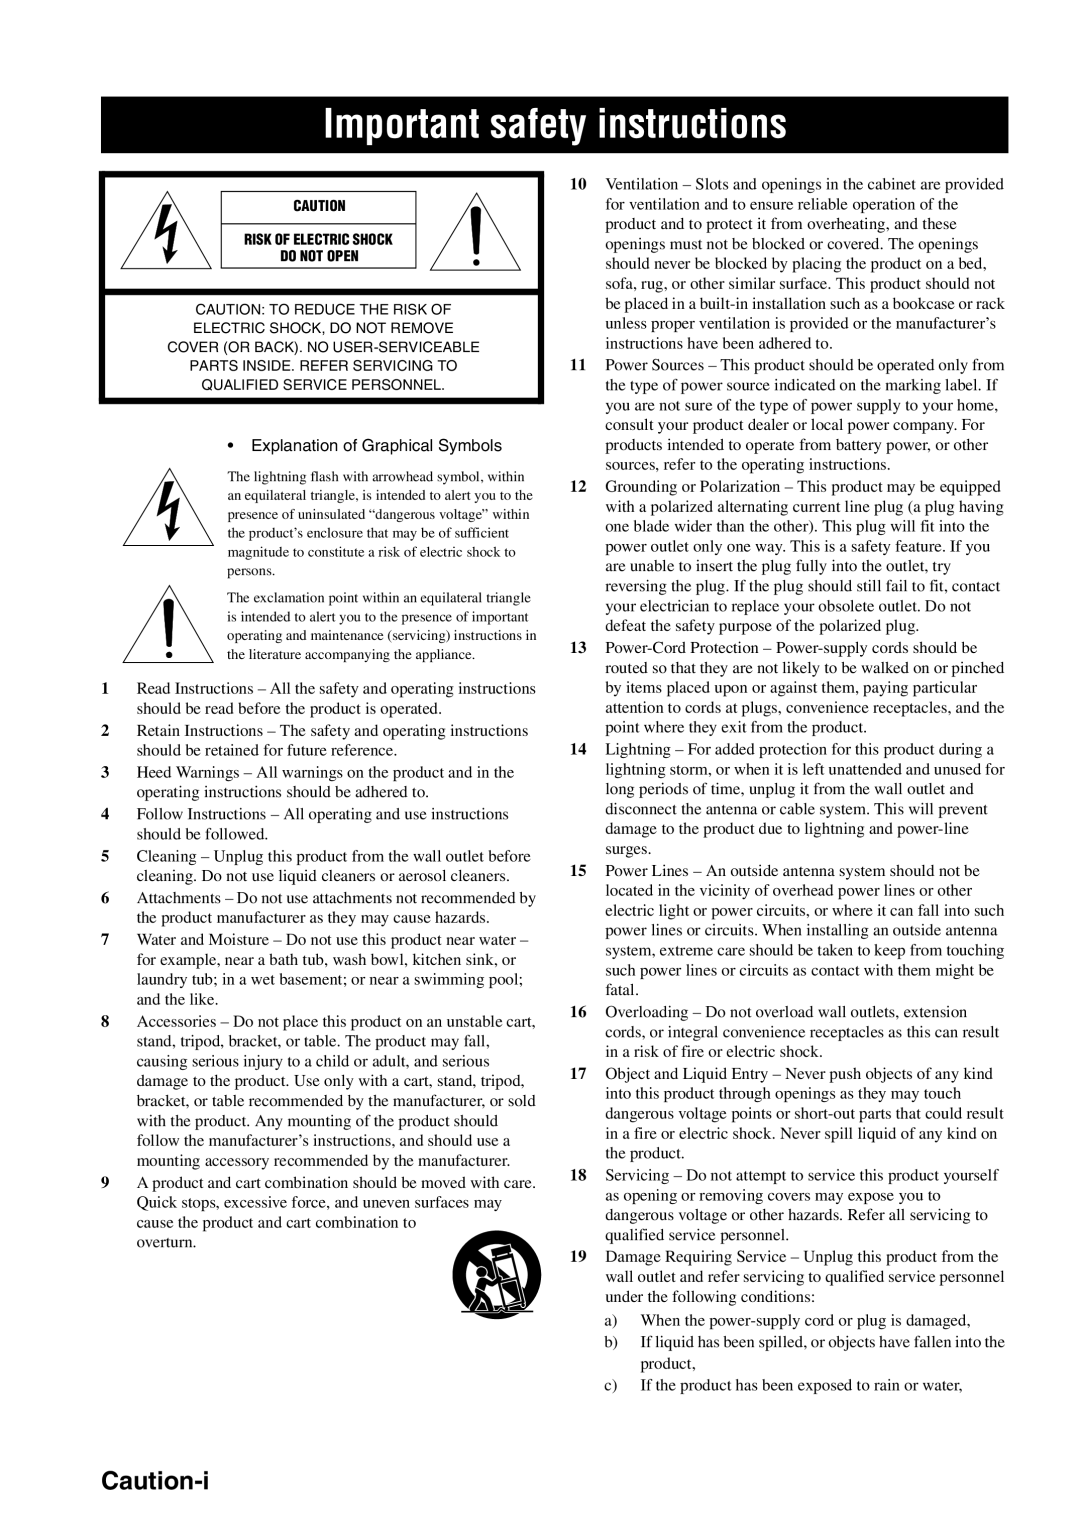 Yamaha HTR-6060 owner manual Caution-i, Important safety instructions 